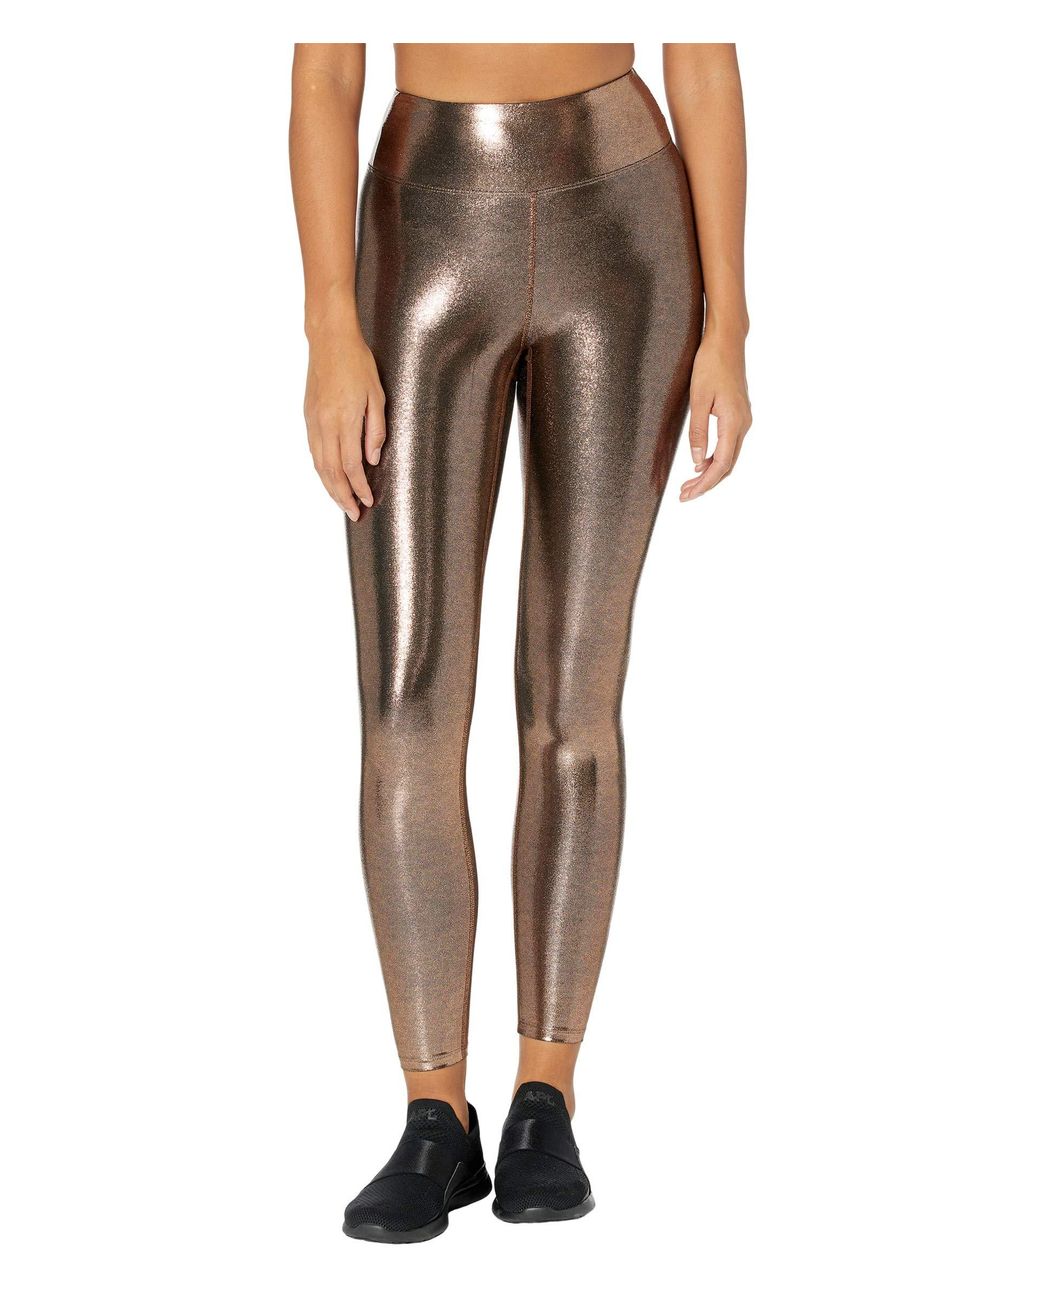 Heroine Sport Synthetic Marvel Leggings in Bronze (Brown) - Lyst